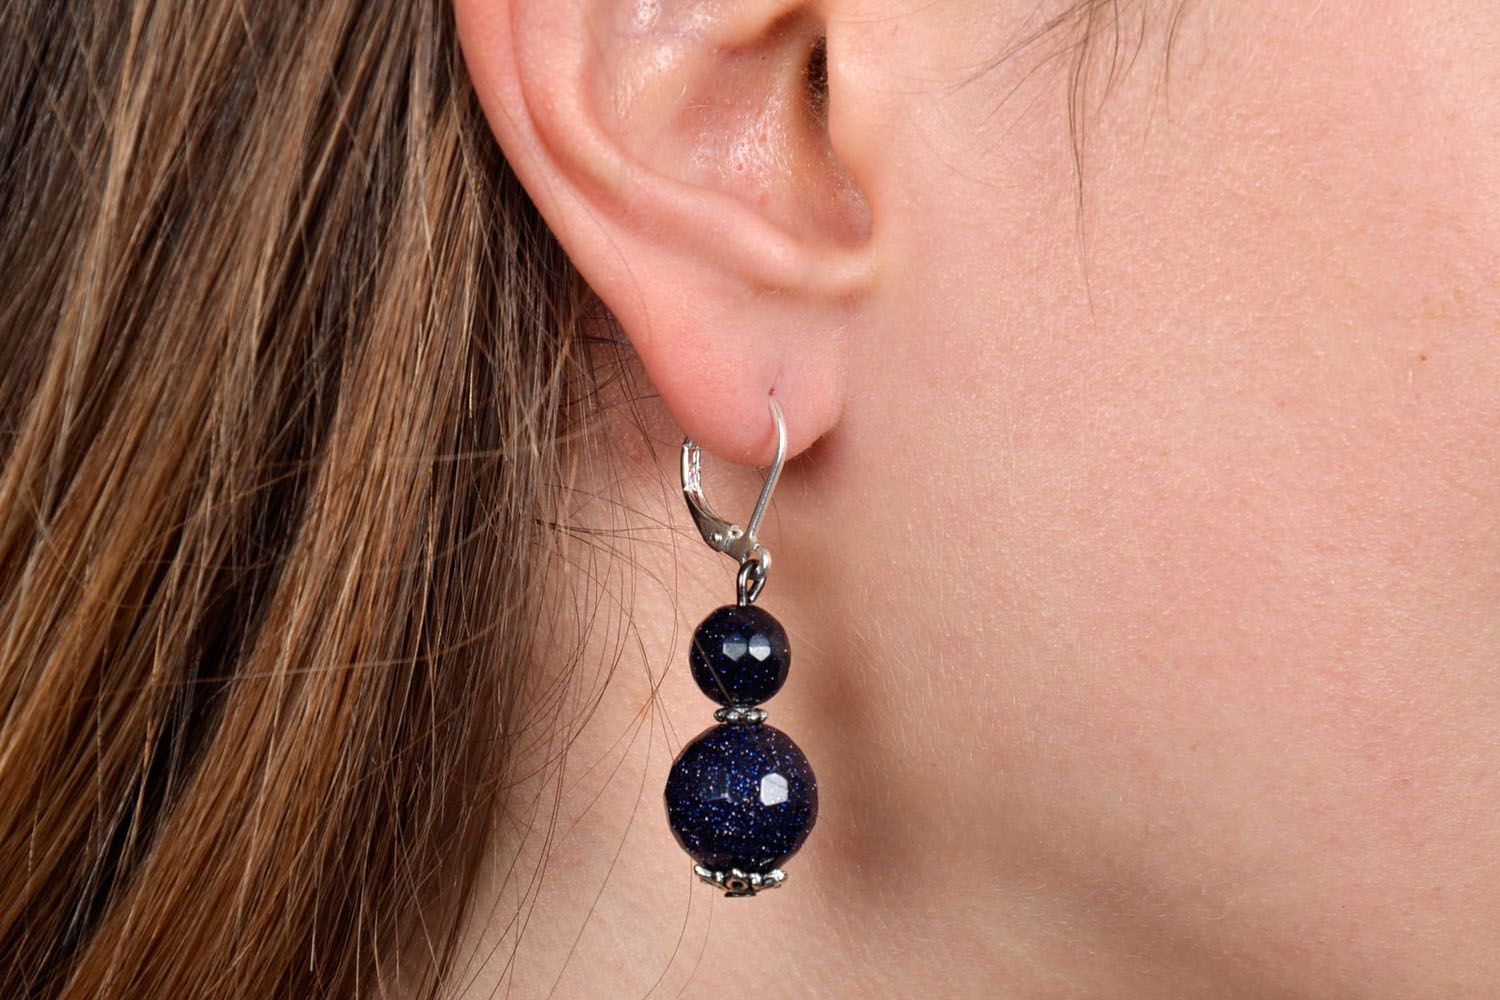 Homemade black earrings photo 5